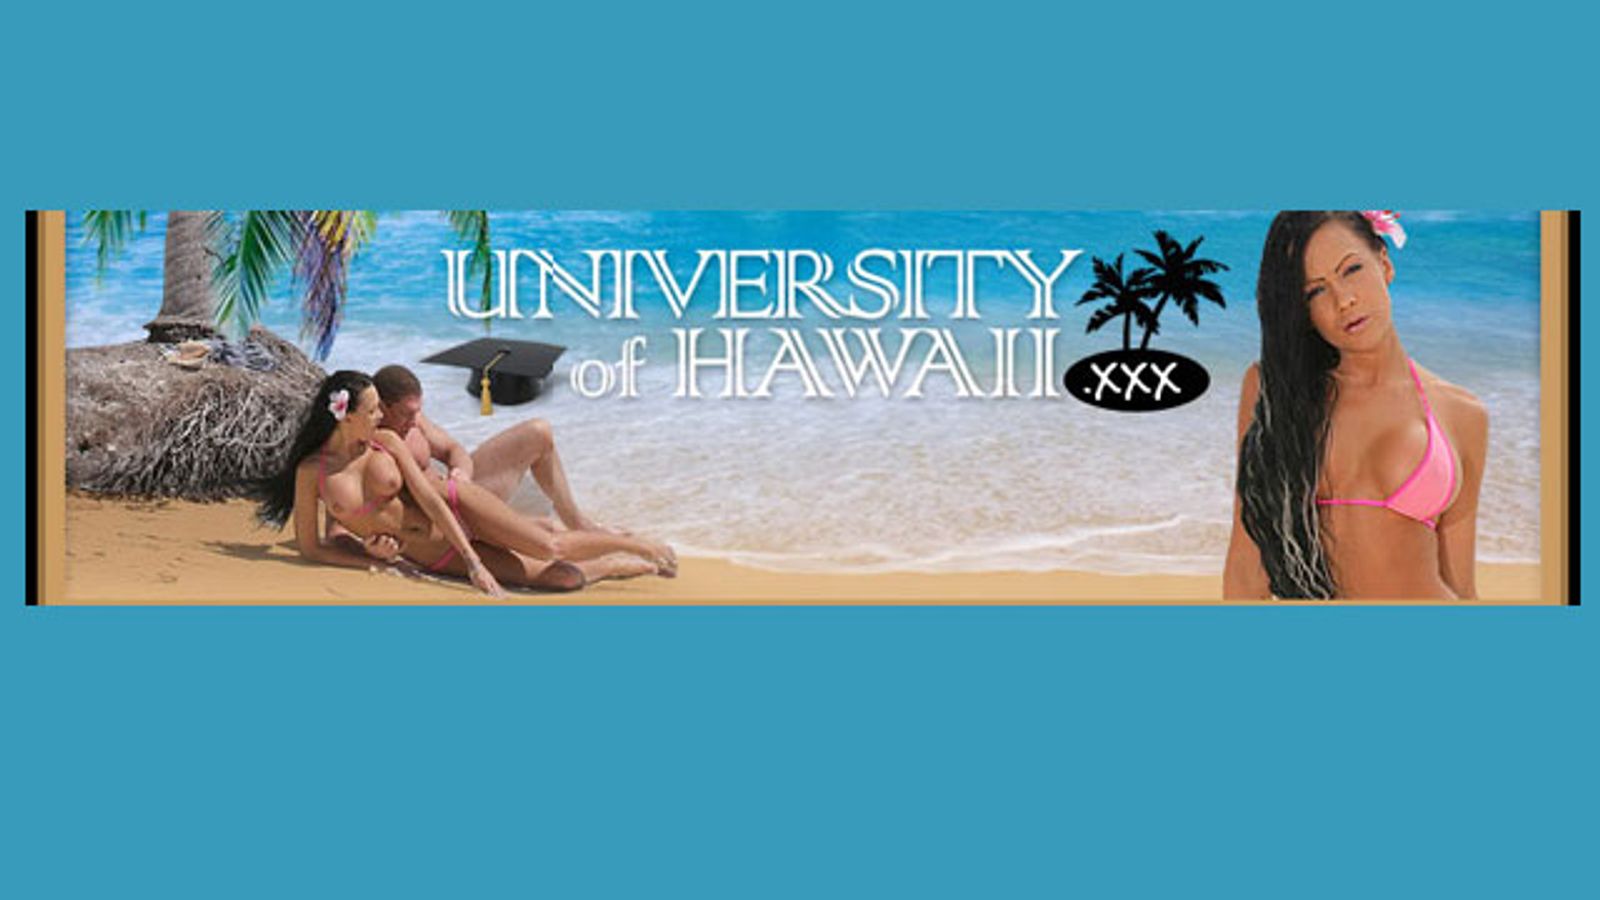 University of Hawaii Threatens Lawsuit Over .XXX Porn Site